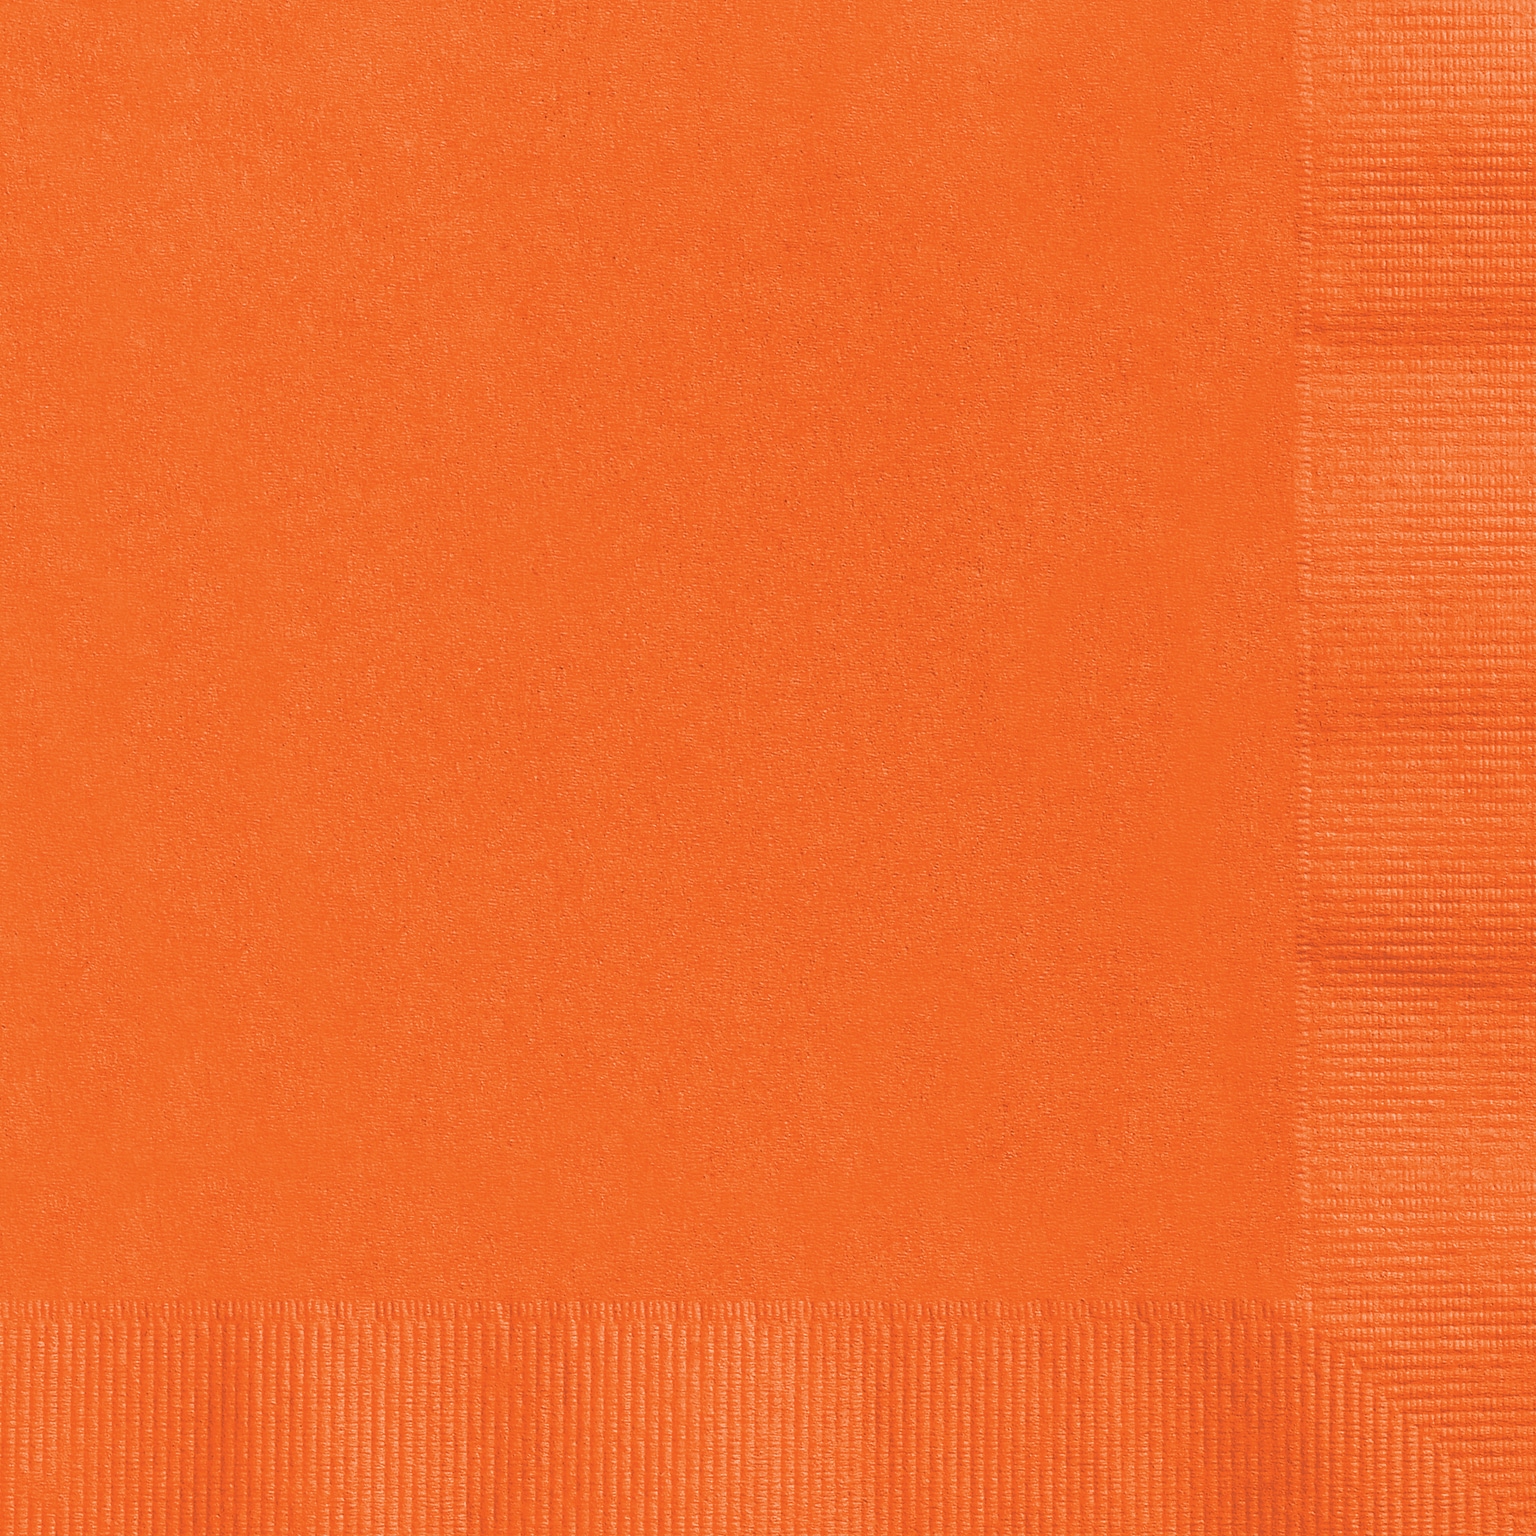 Custom 4-3/4 Square Orange Beverage Napkin, 3-Ply Tissue, 100/Pack